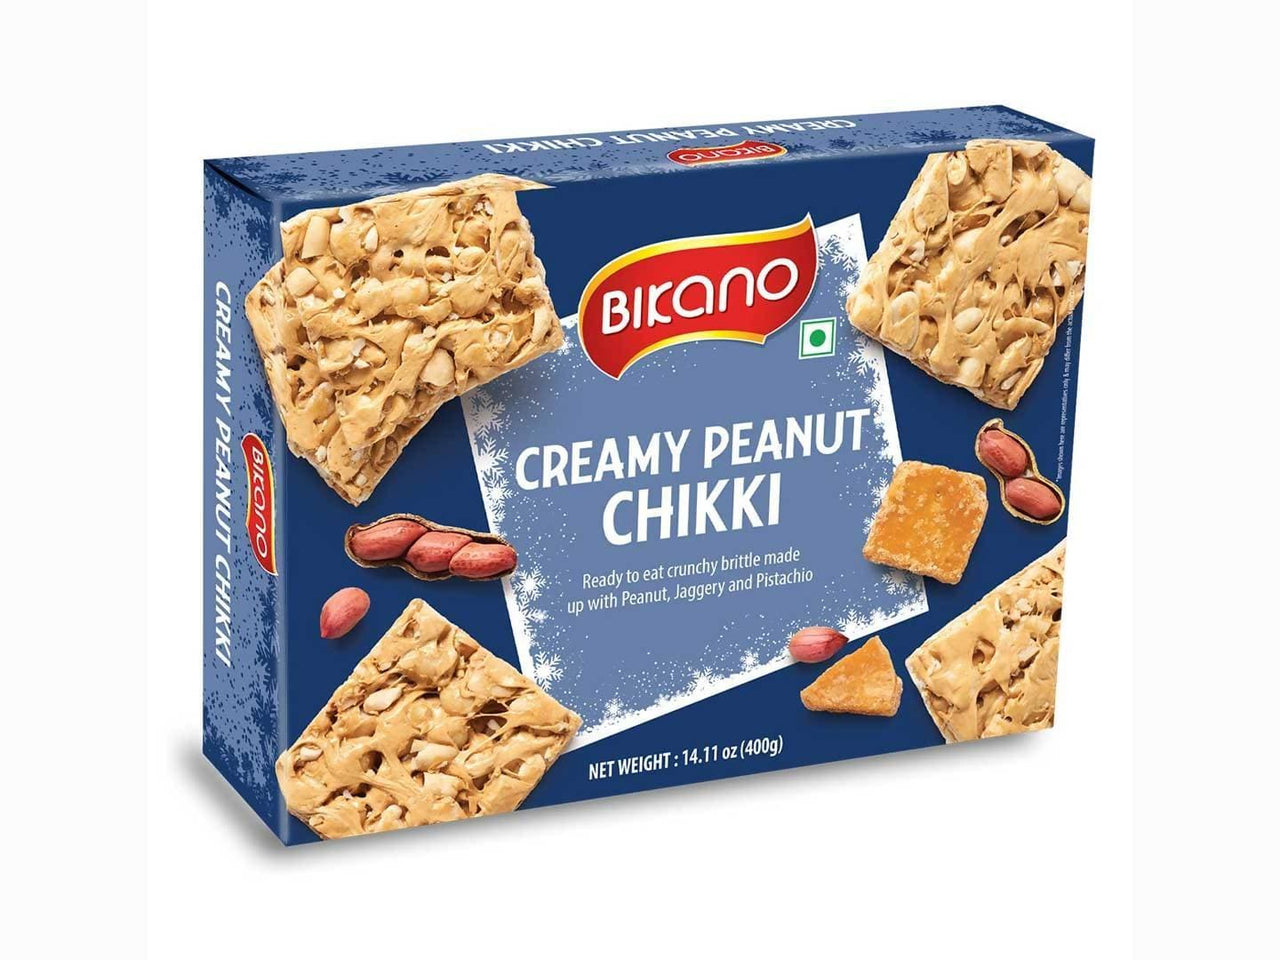 Bikano Creamy Peanut Chikki